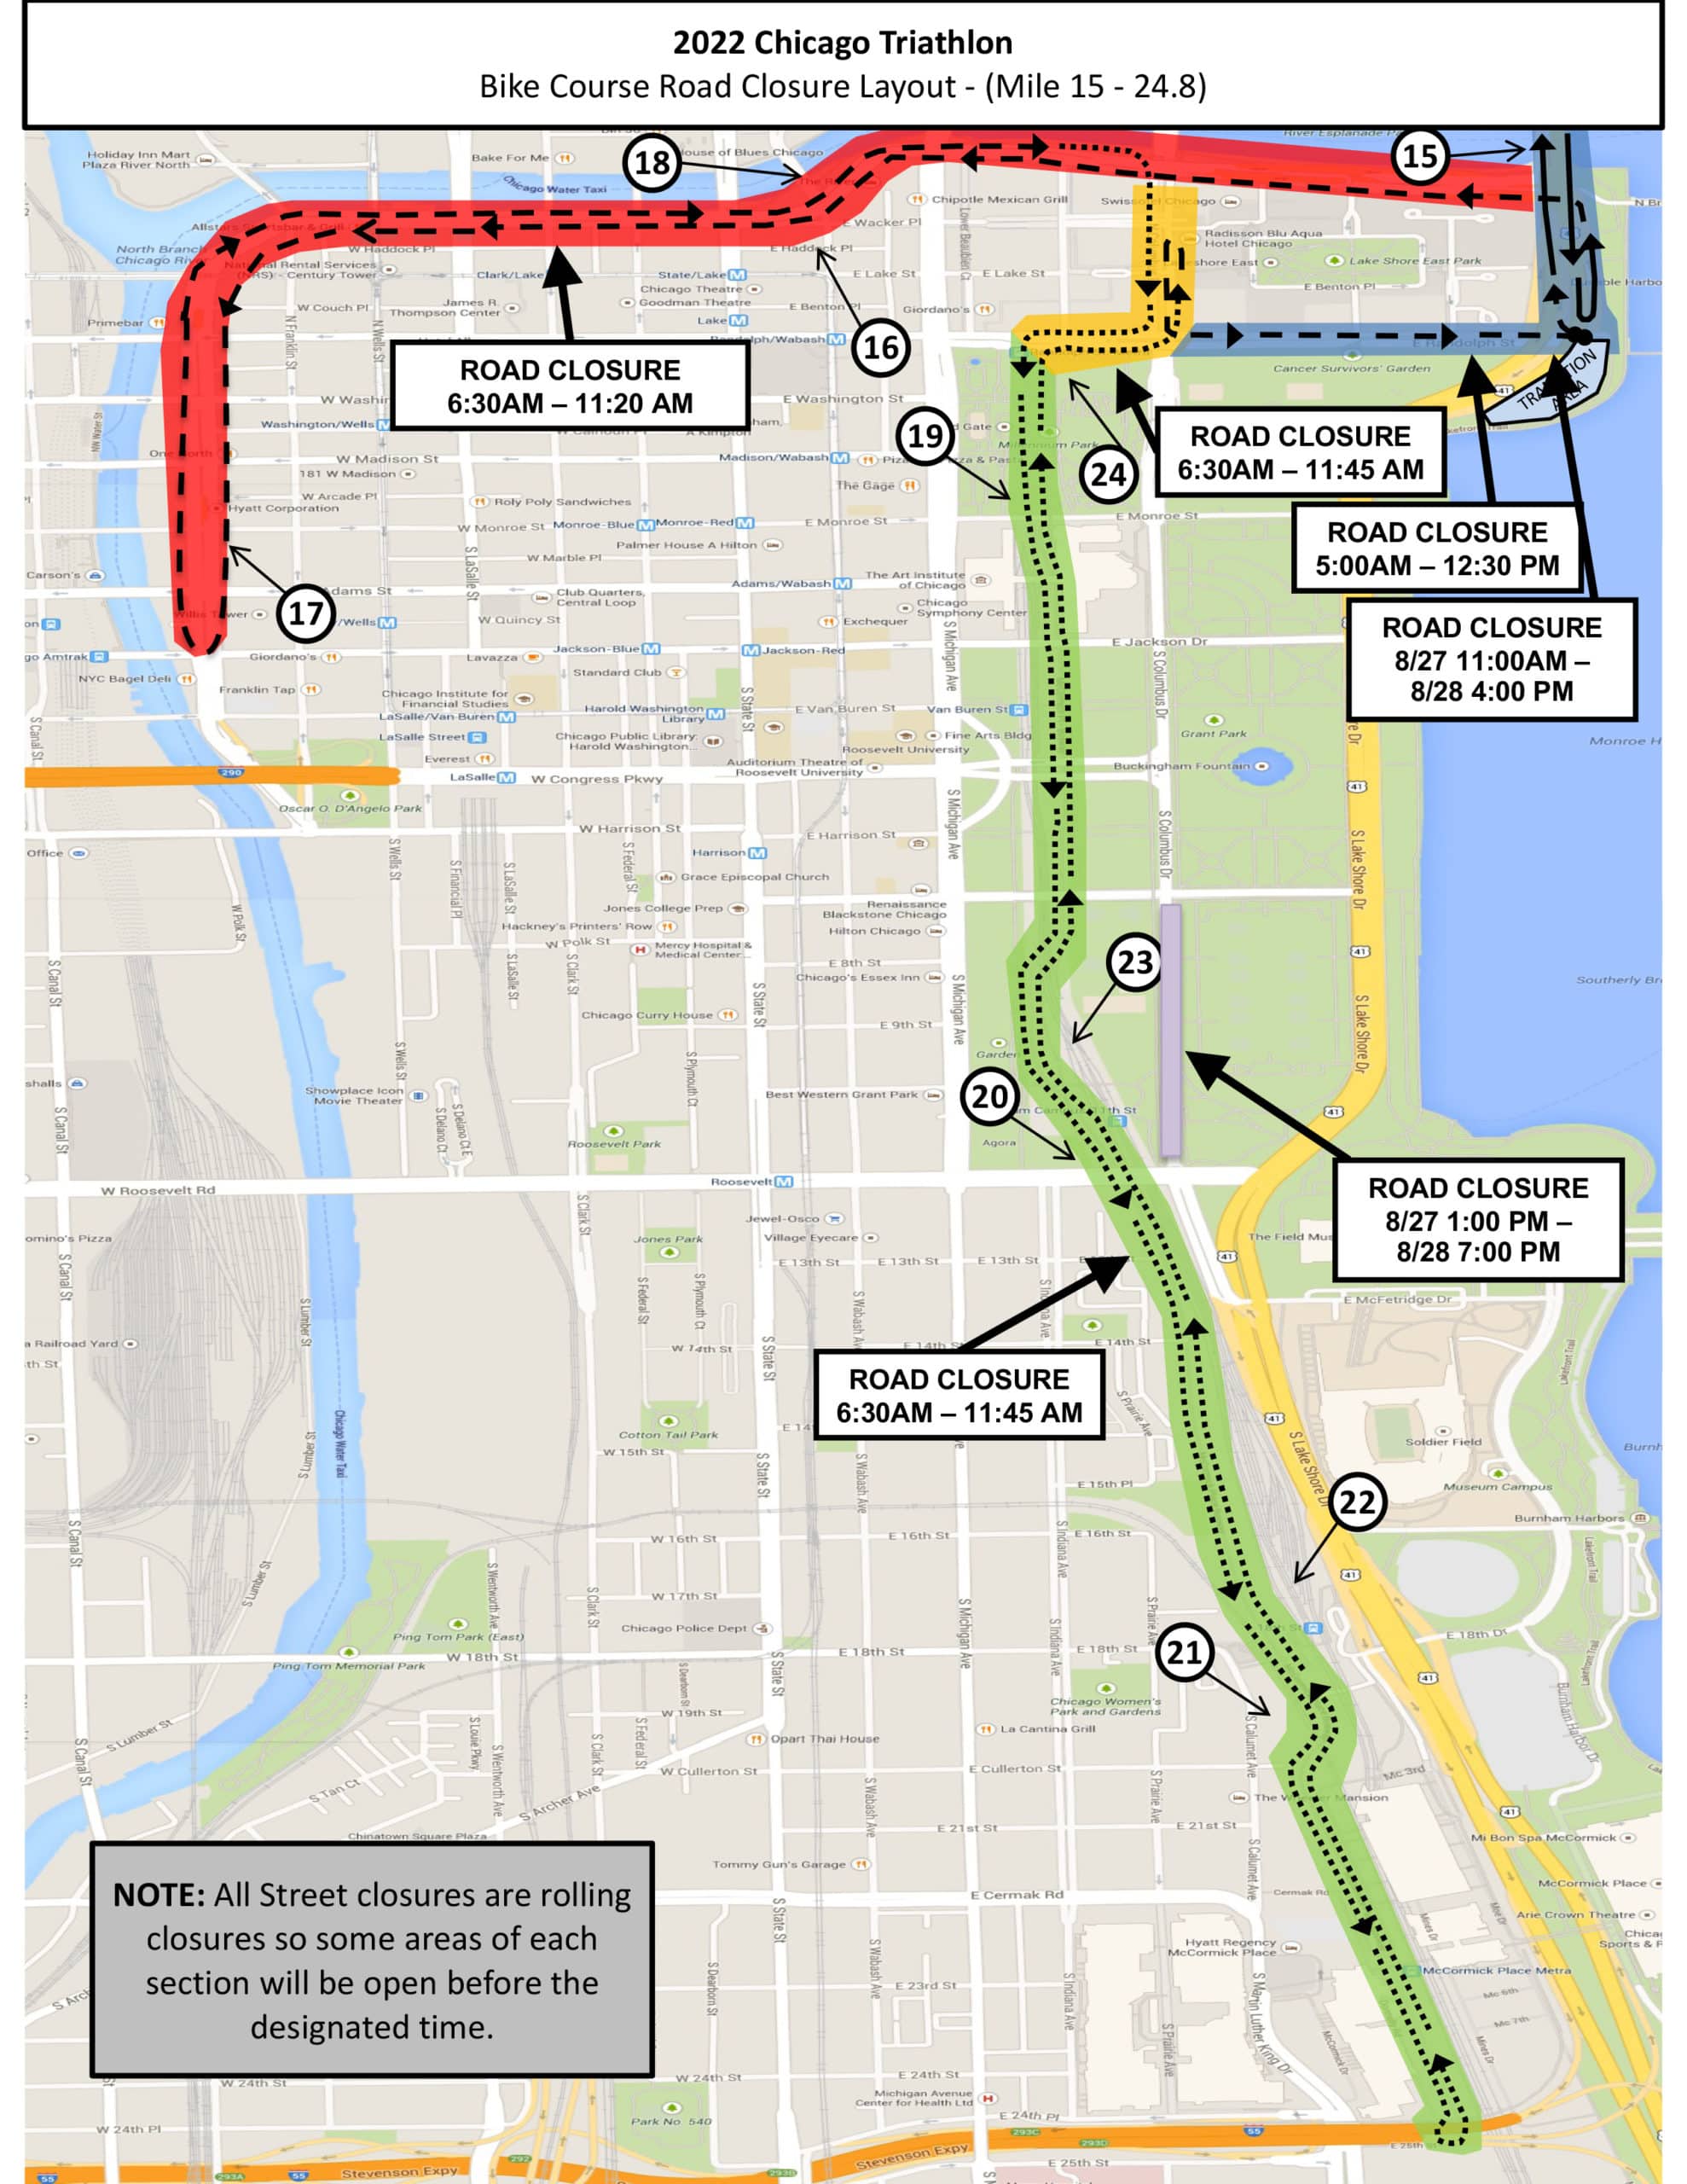 2022 Chicago Triathlon Road Closures and Safety Information